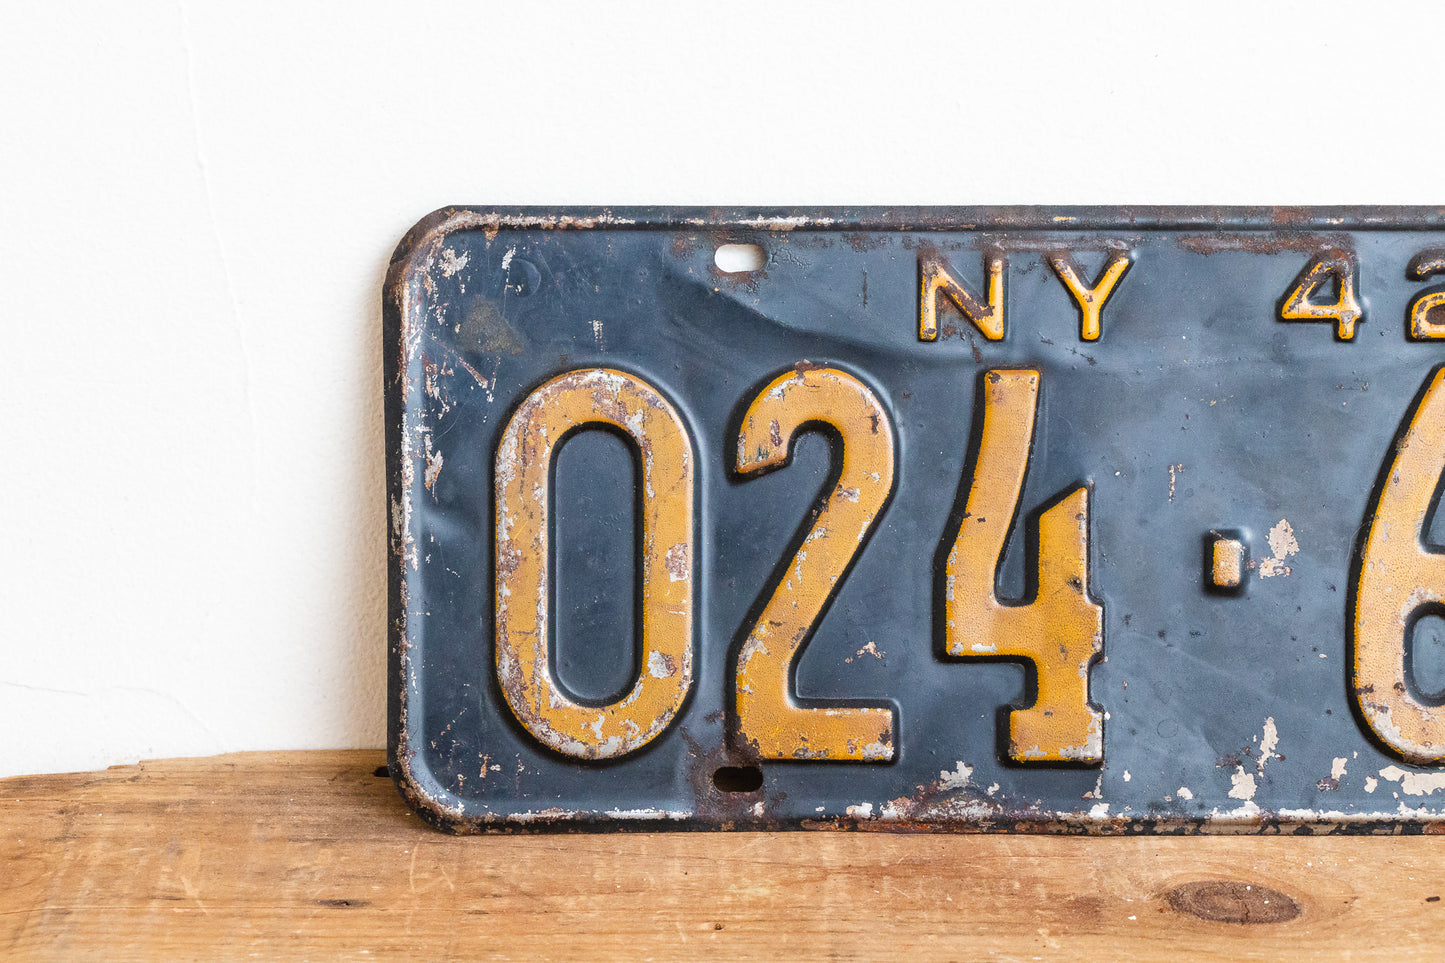 New York 1942 Vintage Omnibus Taxi License Plate - Eagle's Eye Finds